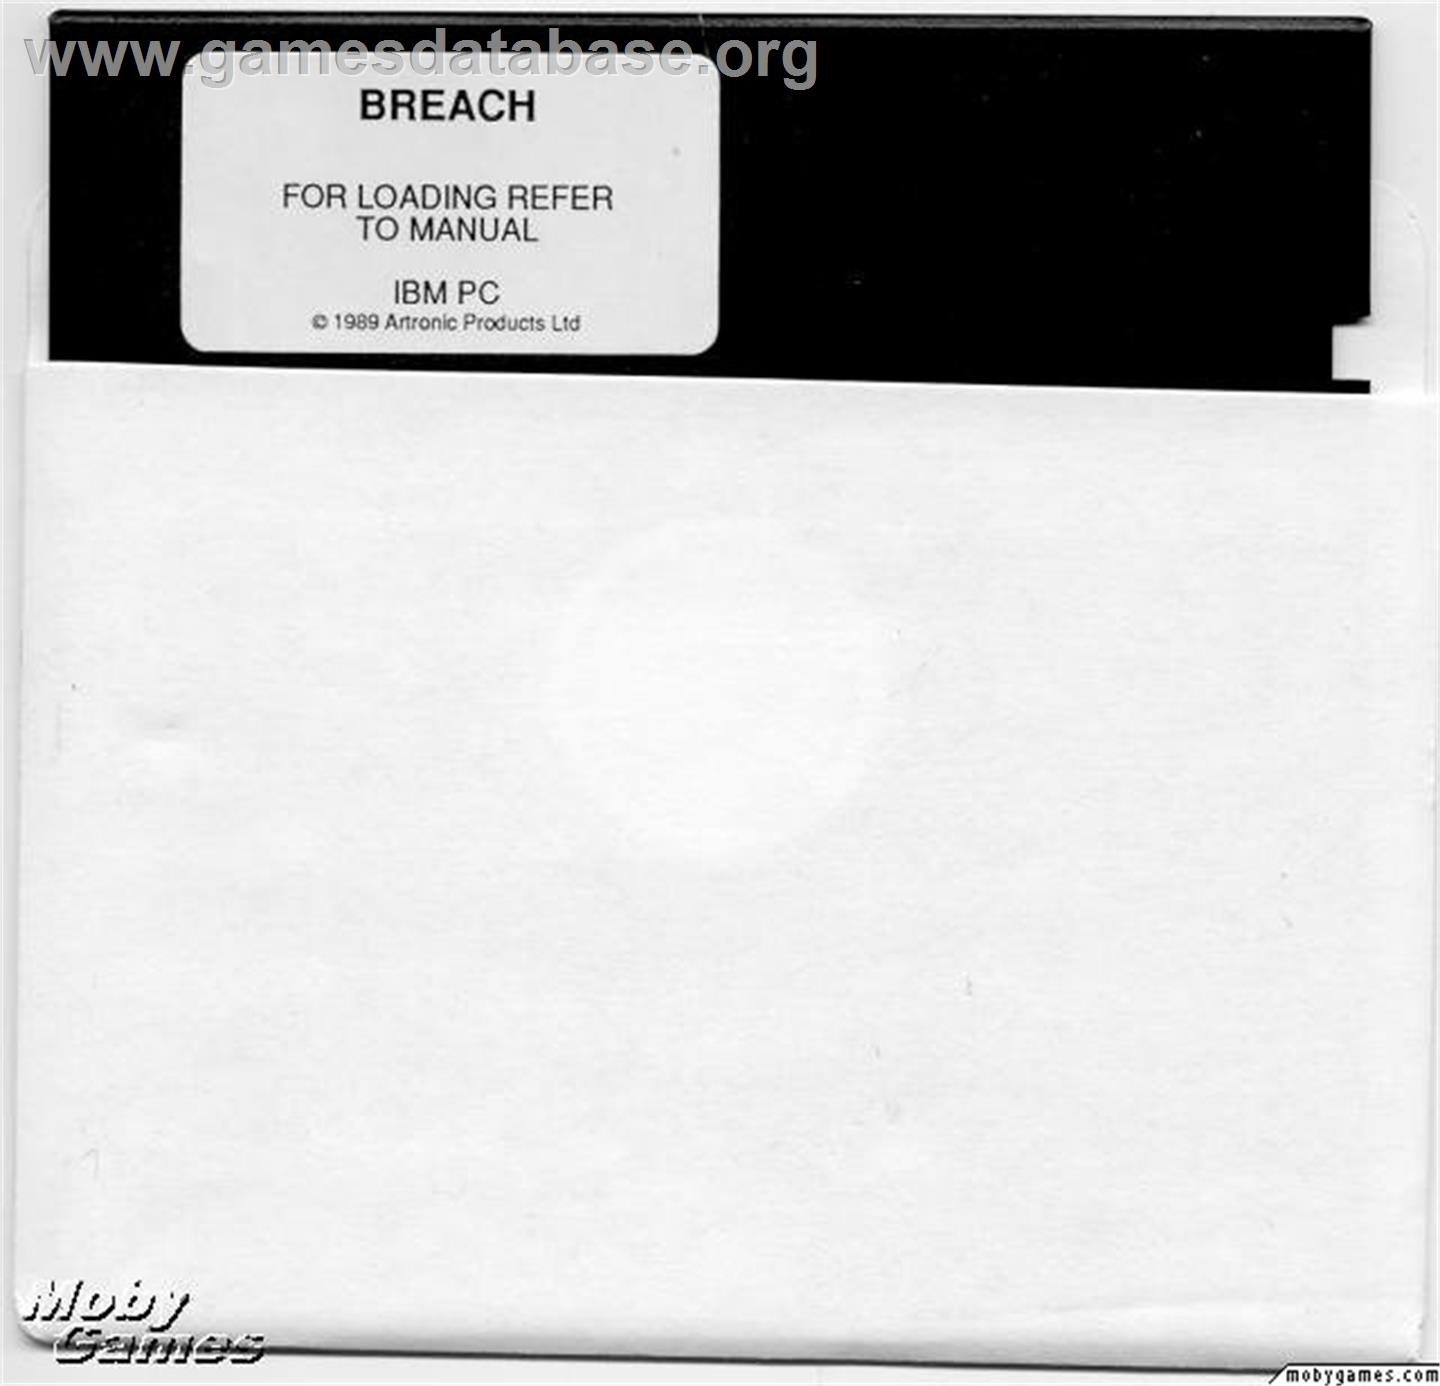 Breach - Microsoft DOS - Artwork - Disc